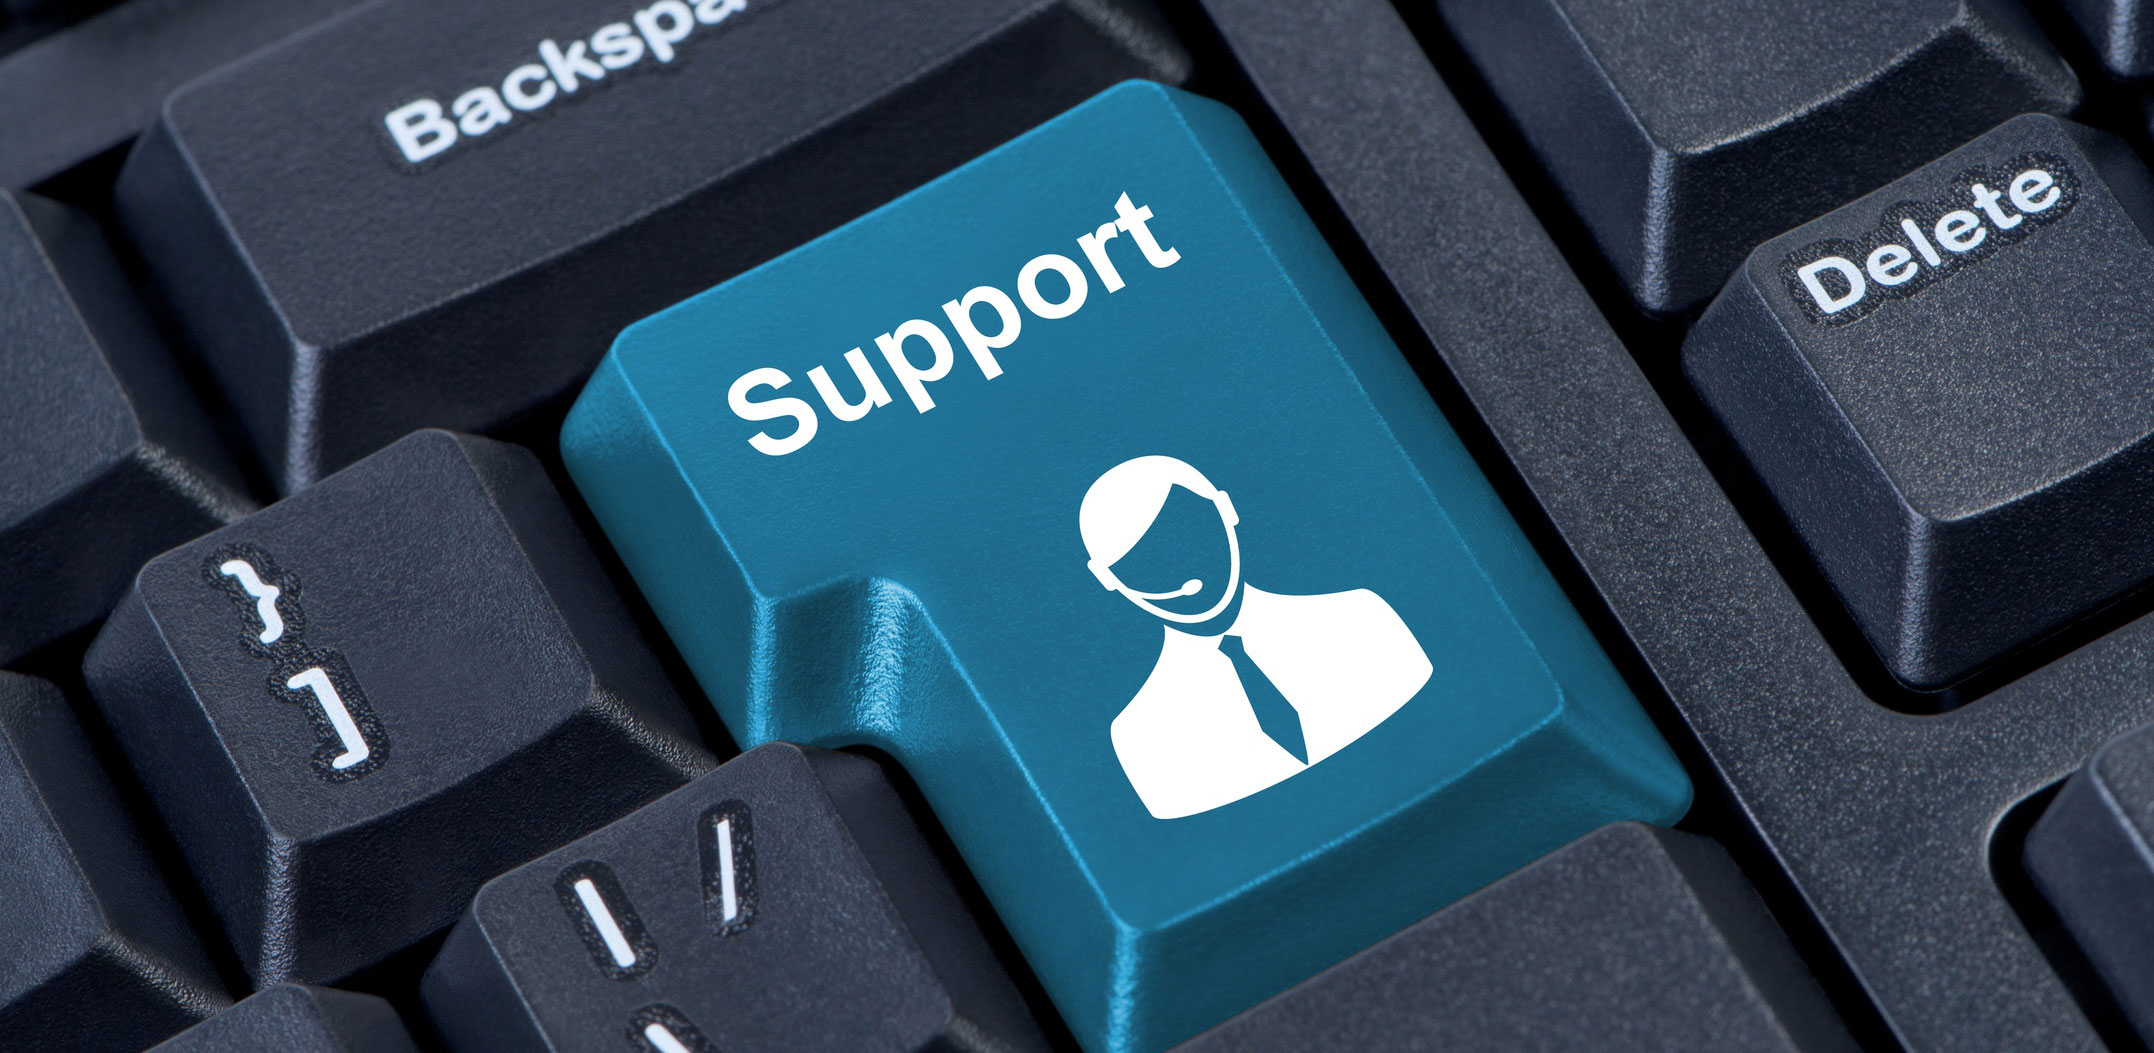 Support terms. Техническая поддержка. It поддержка. Техподдержка картинка. Поддержка сайта.